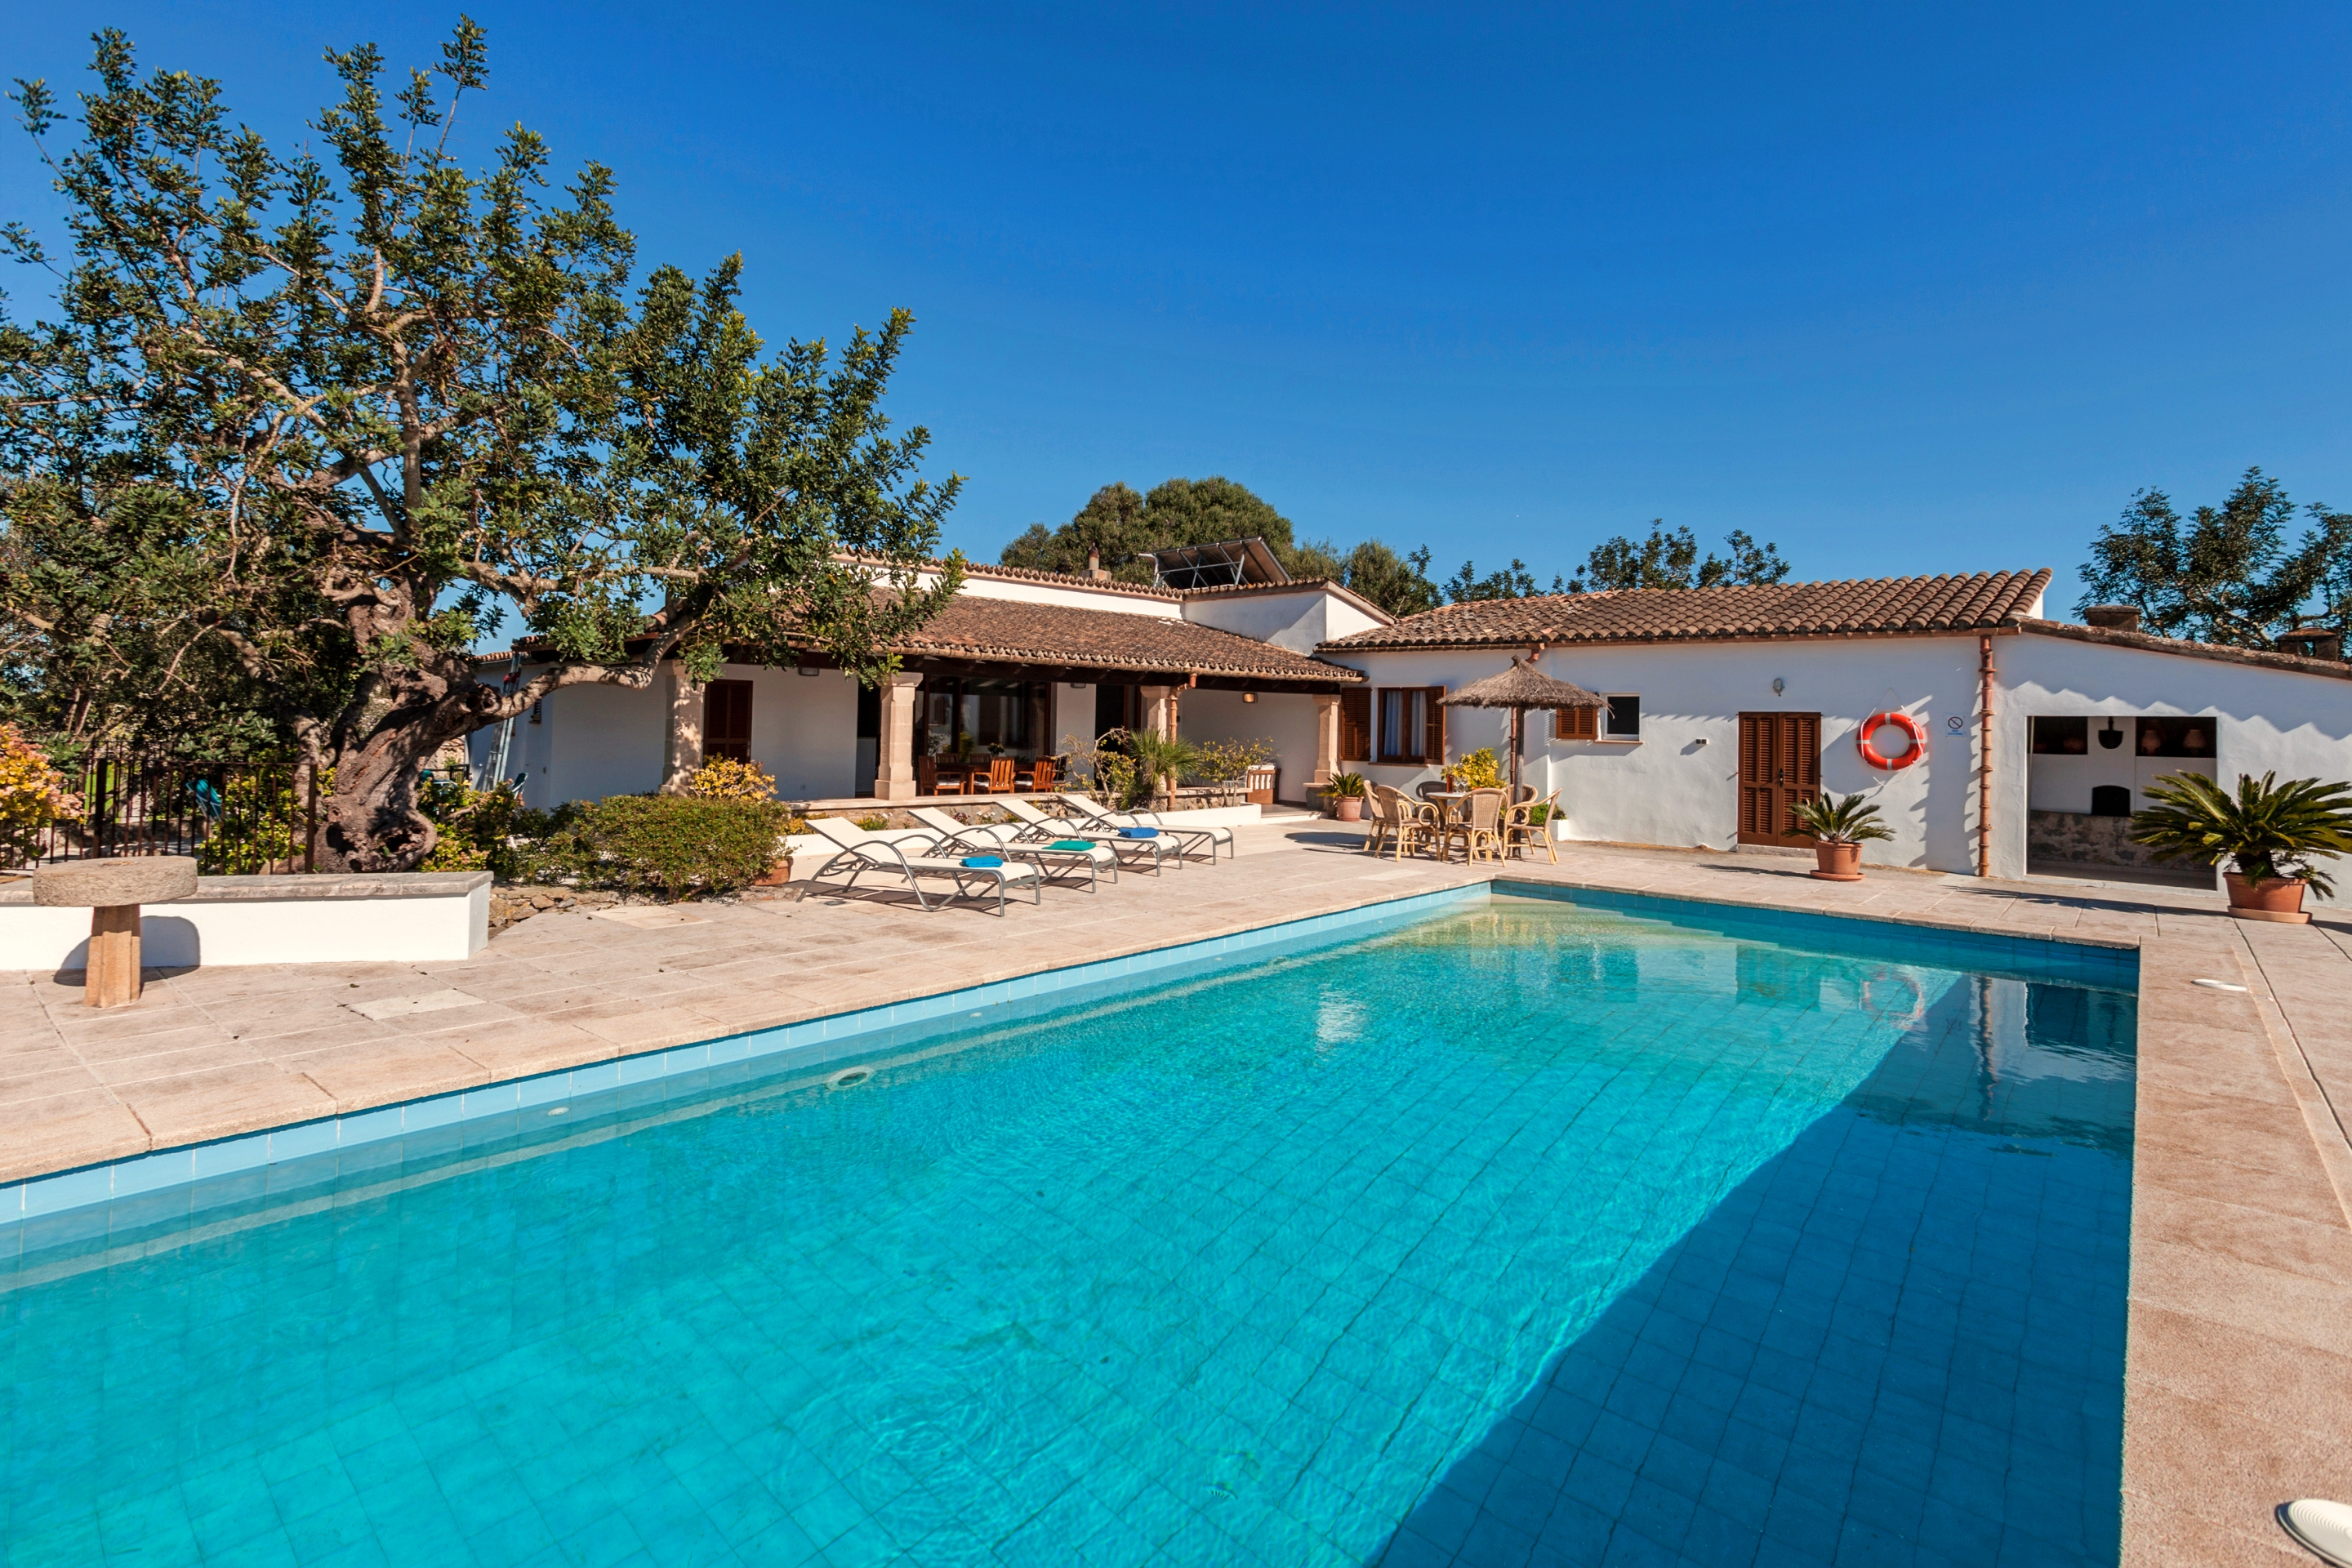 3 bedroom holiday rental with pool Pollensa Mallorca